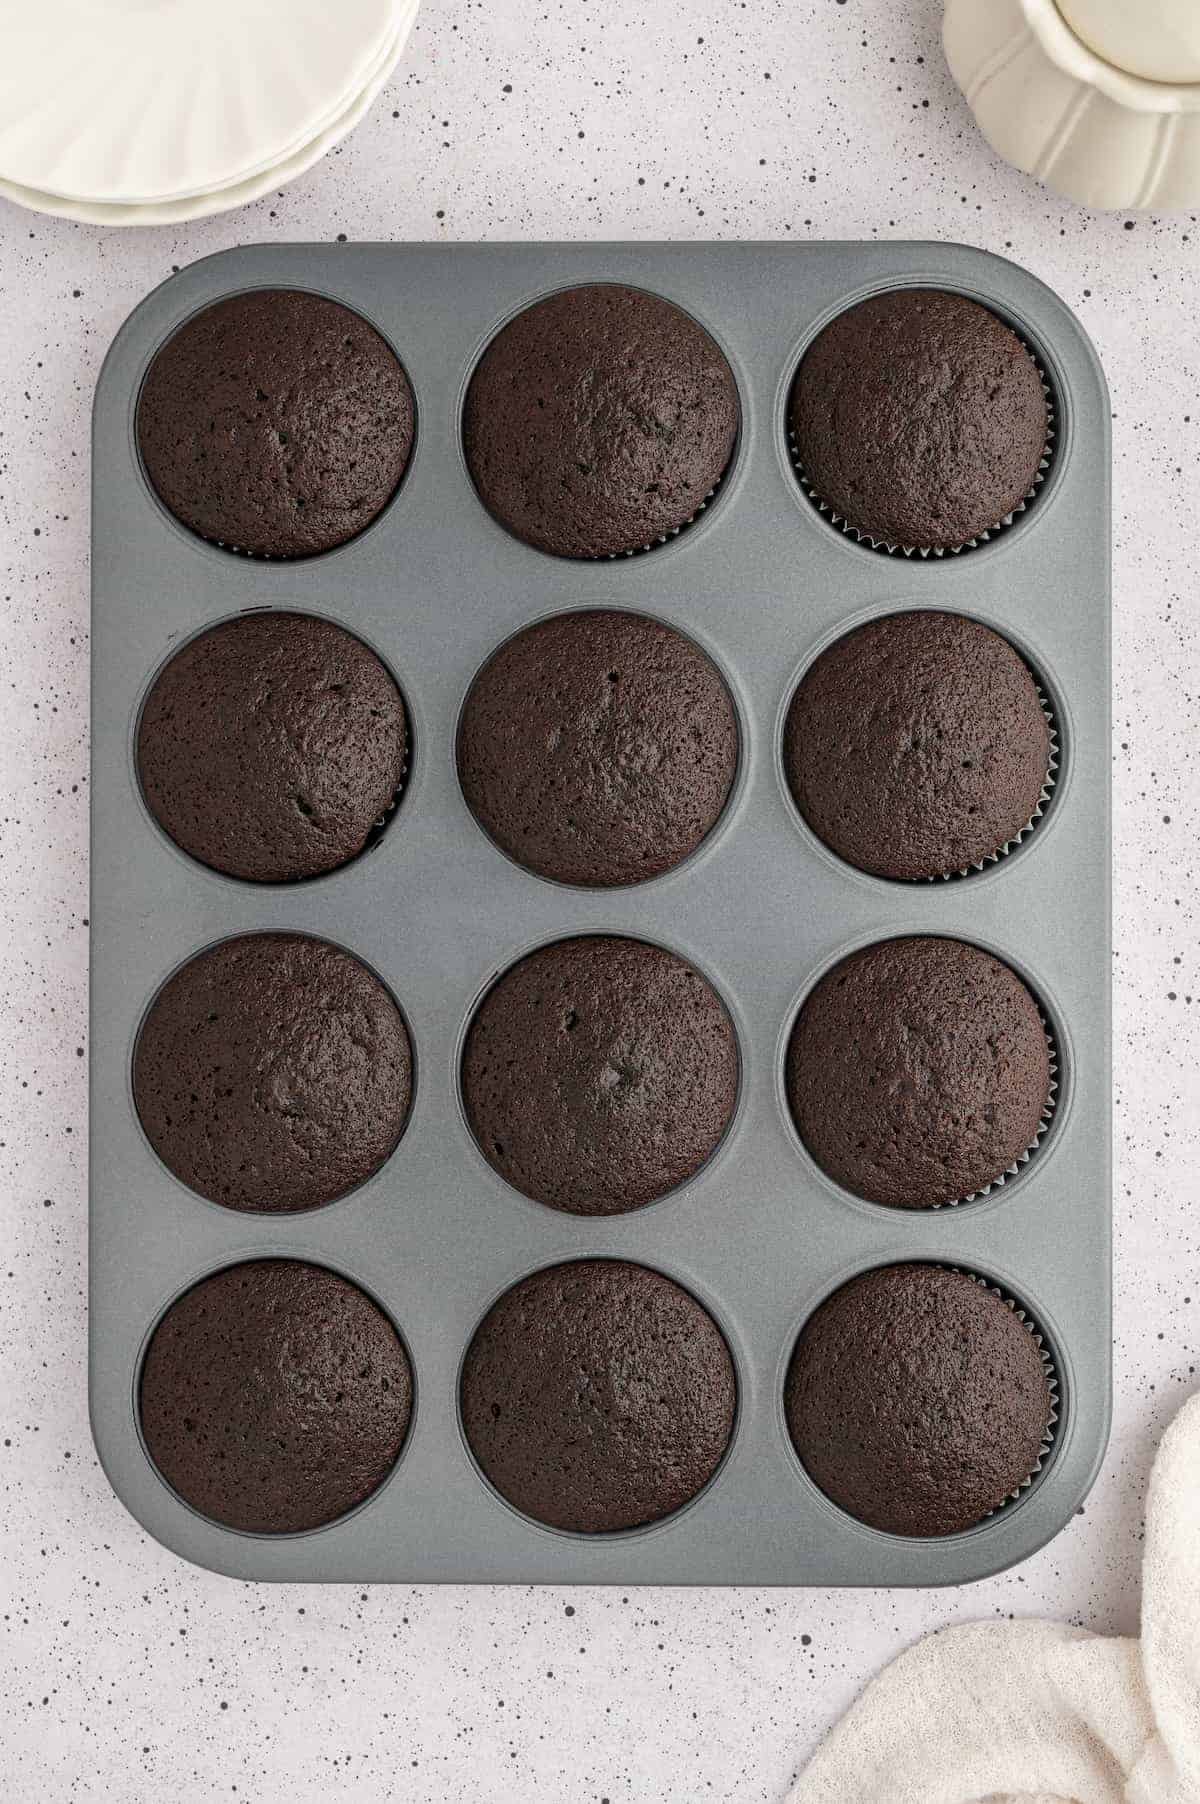 Vegan chocolate cupcakes in pan after baking.